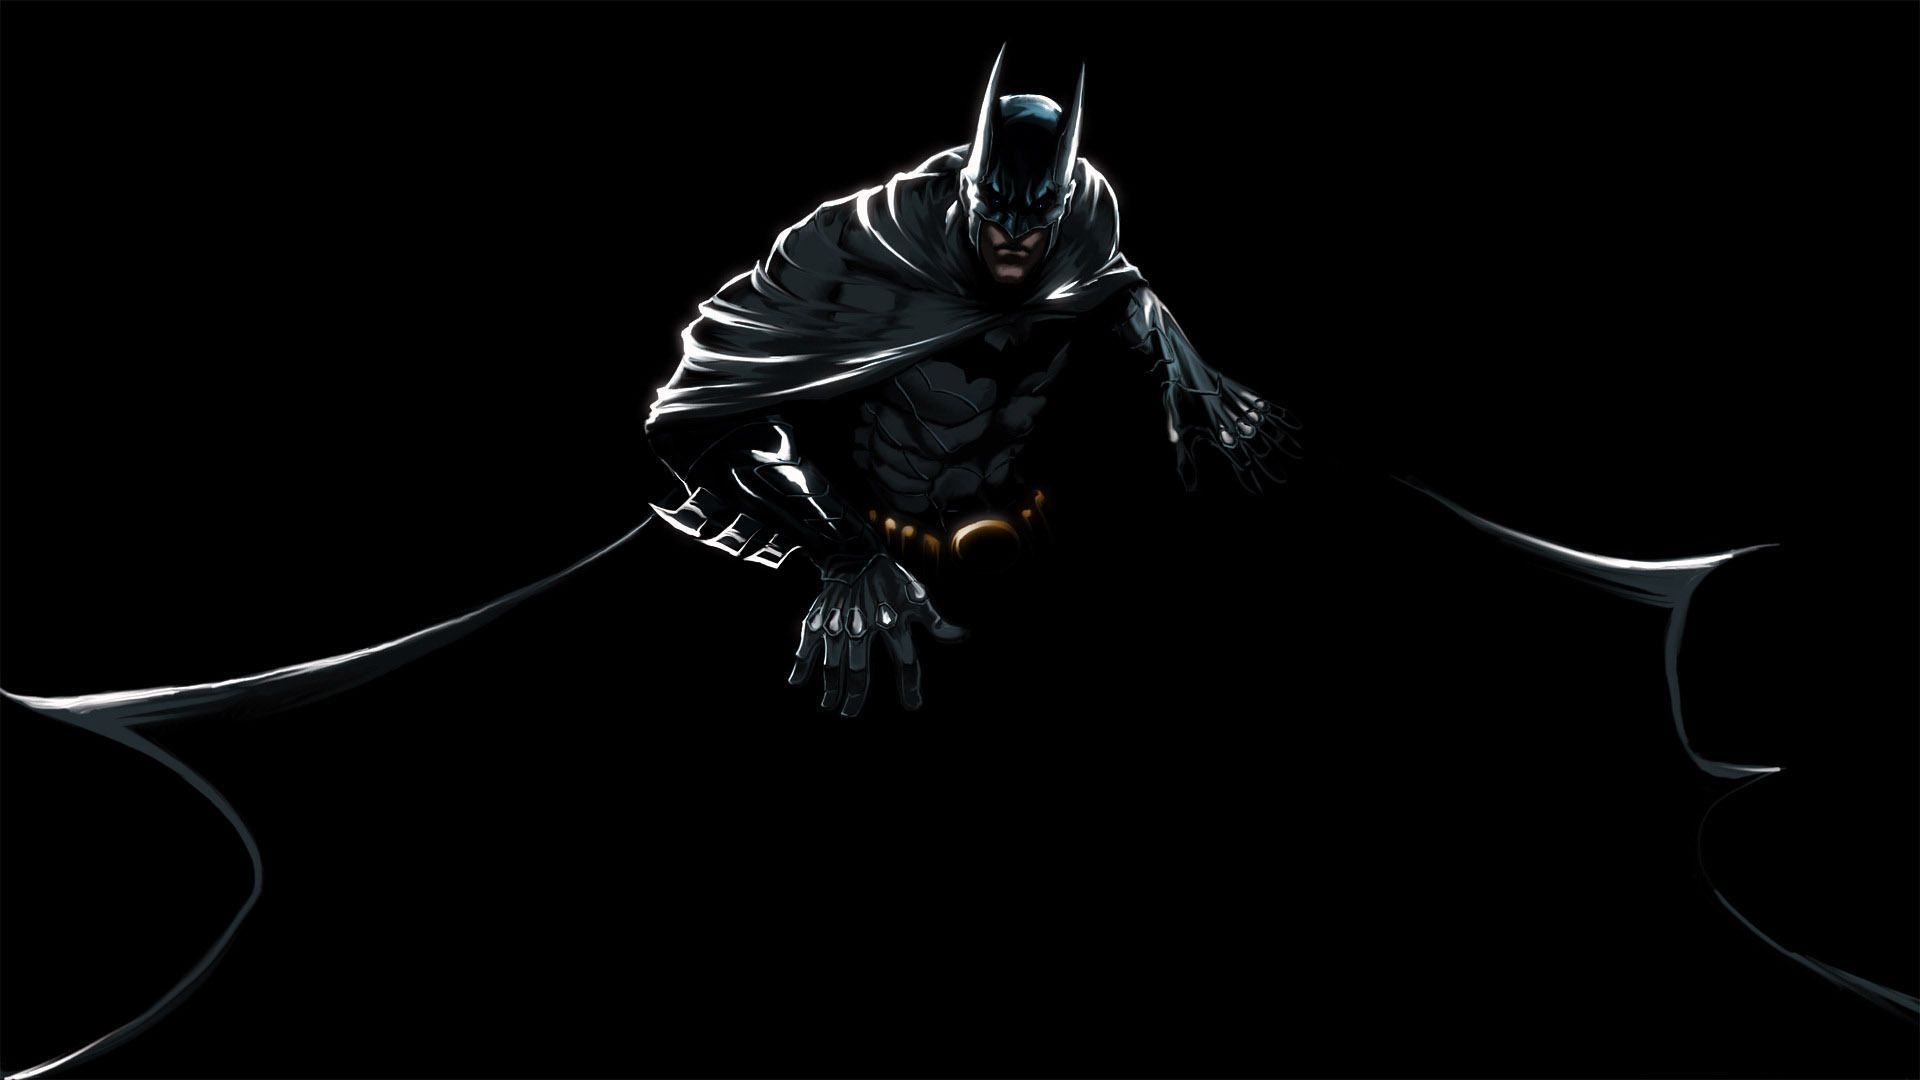 Batman On Black Background Hd Desktop Wallpapers amzing hd